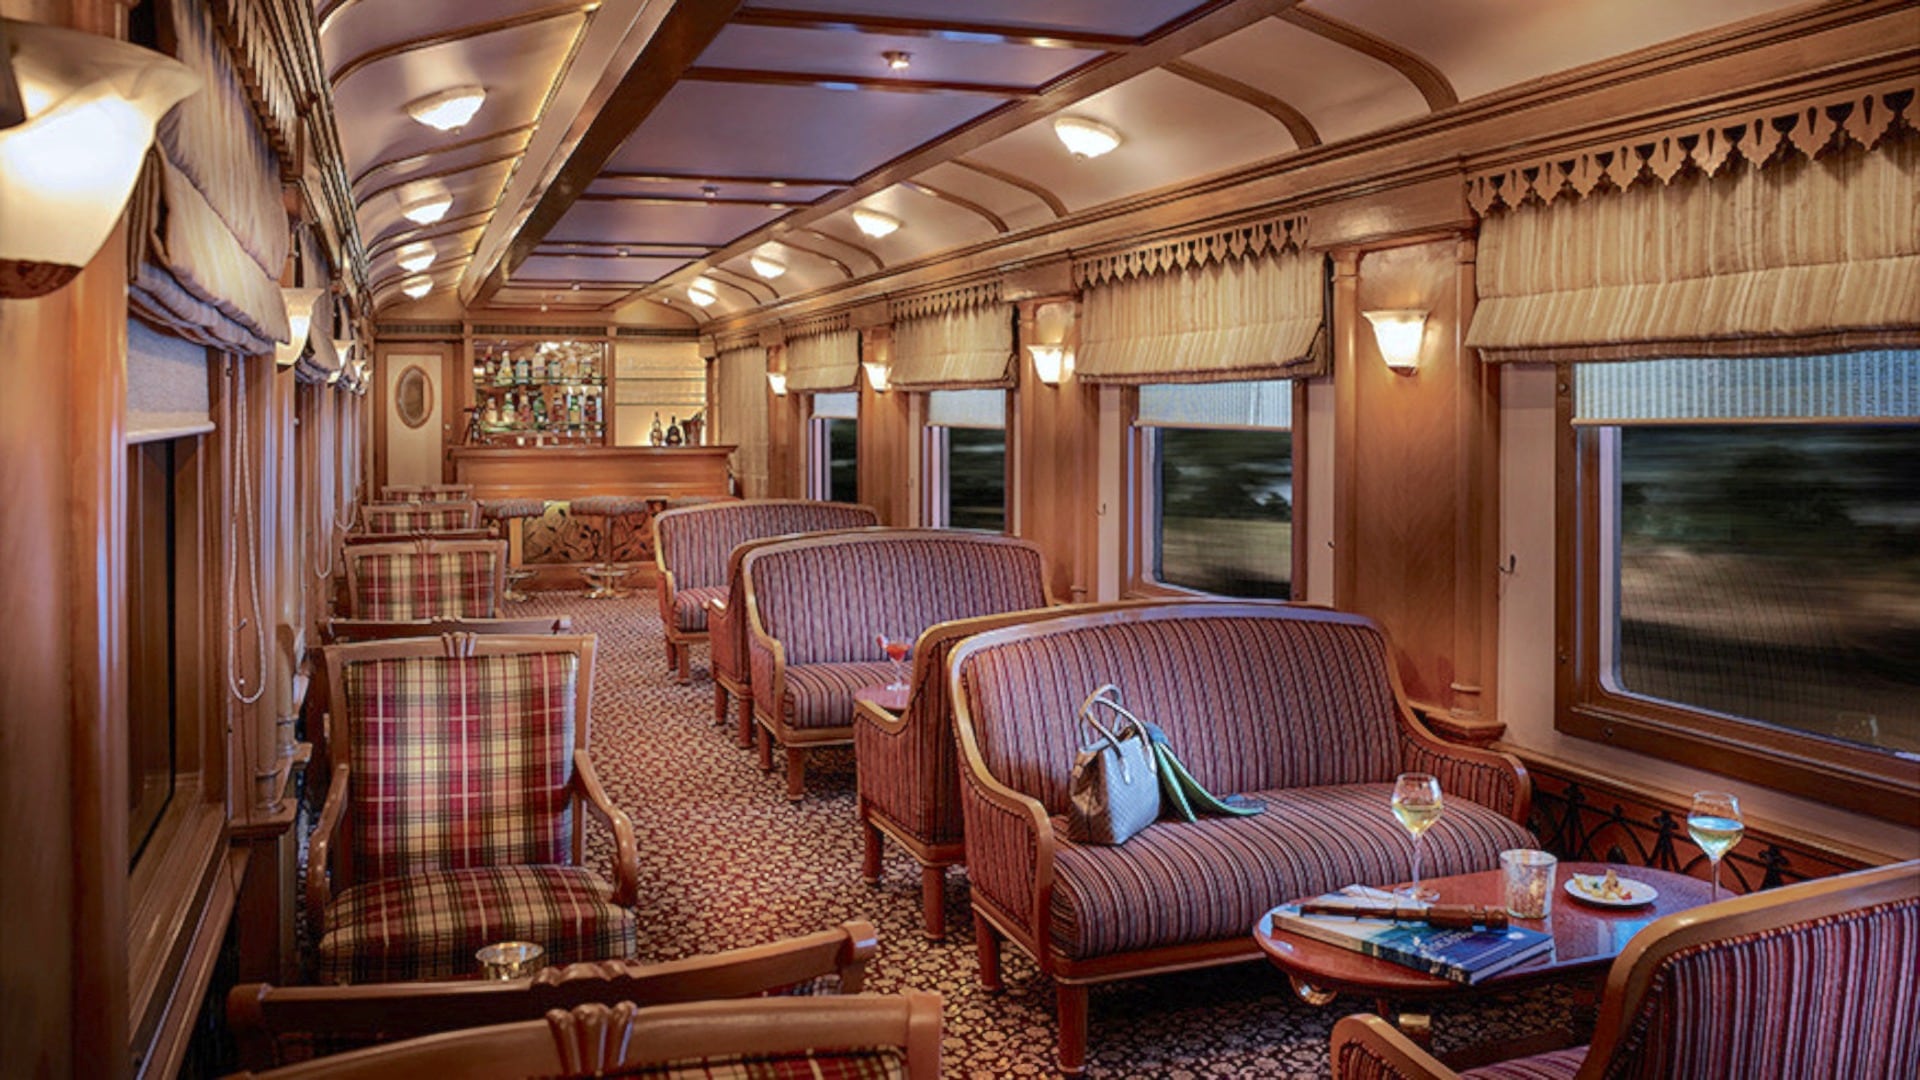 Luxury on wheels: Royal trains of India | Travel - Hindustan Times